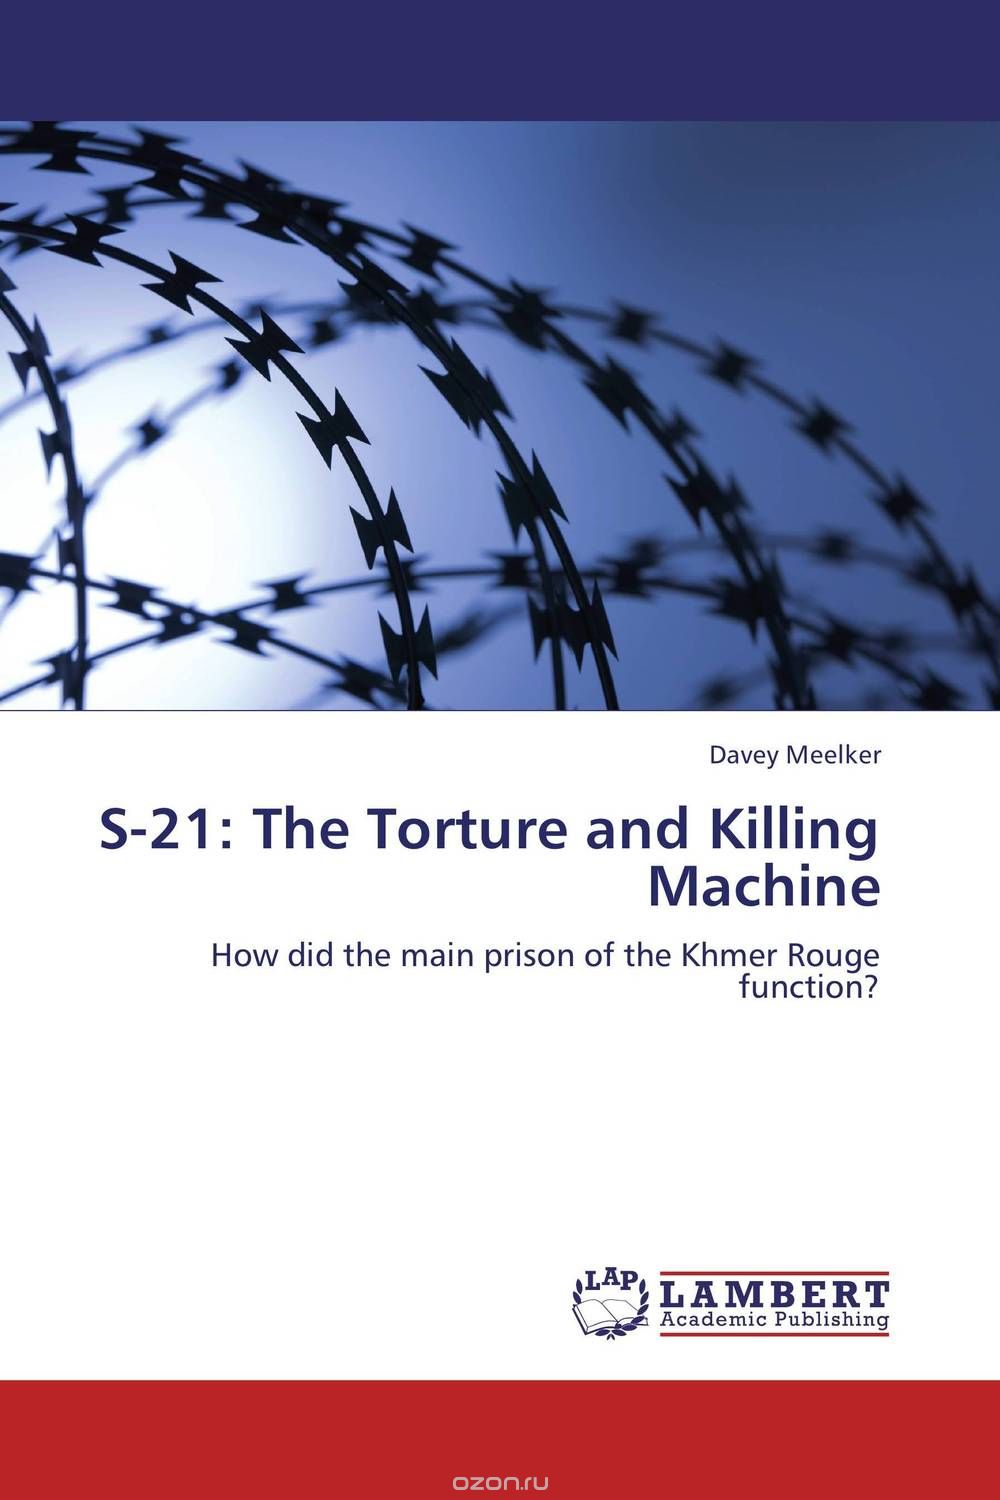 Скачать книгу "S-21: The Torture and Killing Machine"